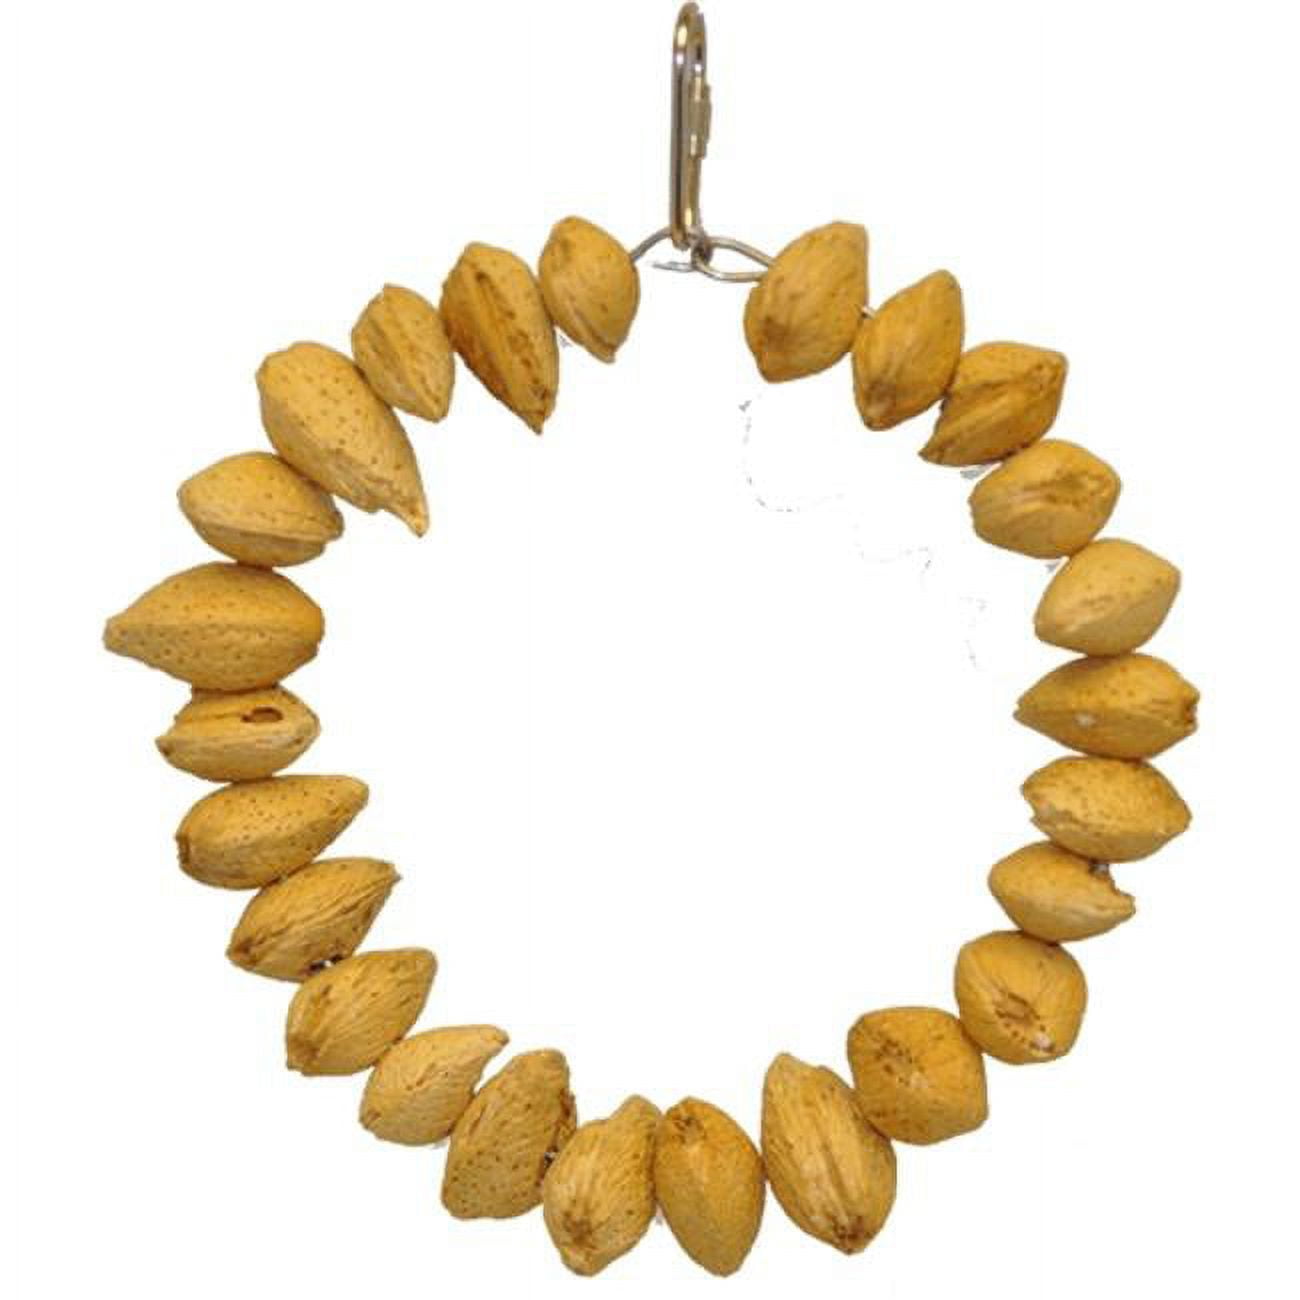 Hb901 6.5 X 6.5 X 1 In. Almond Nut Ring